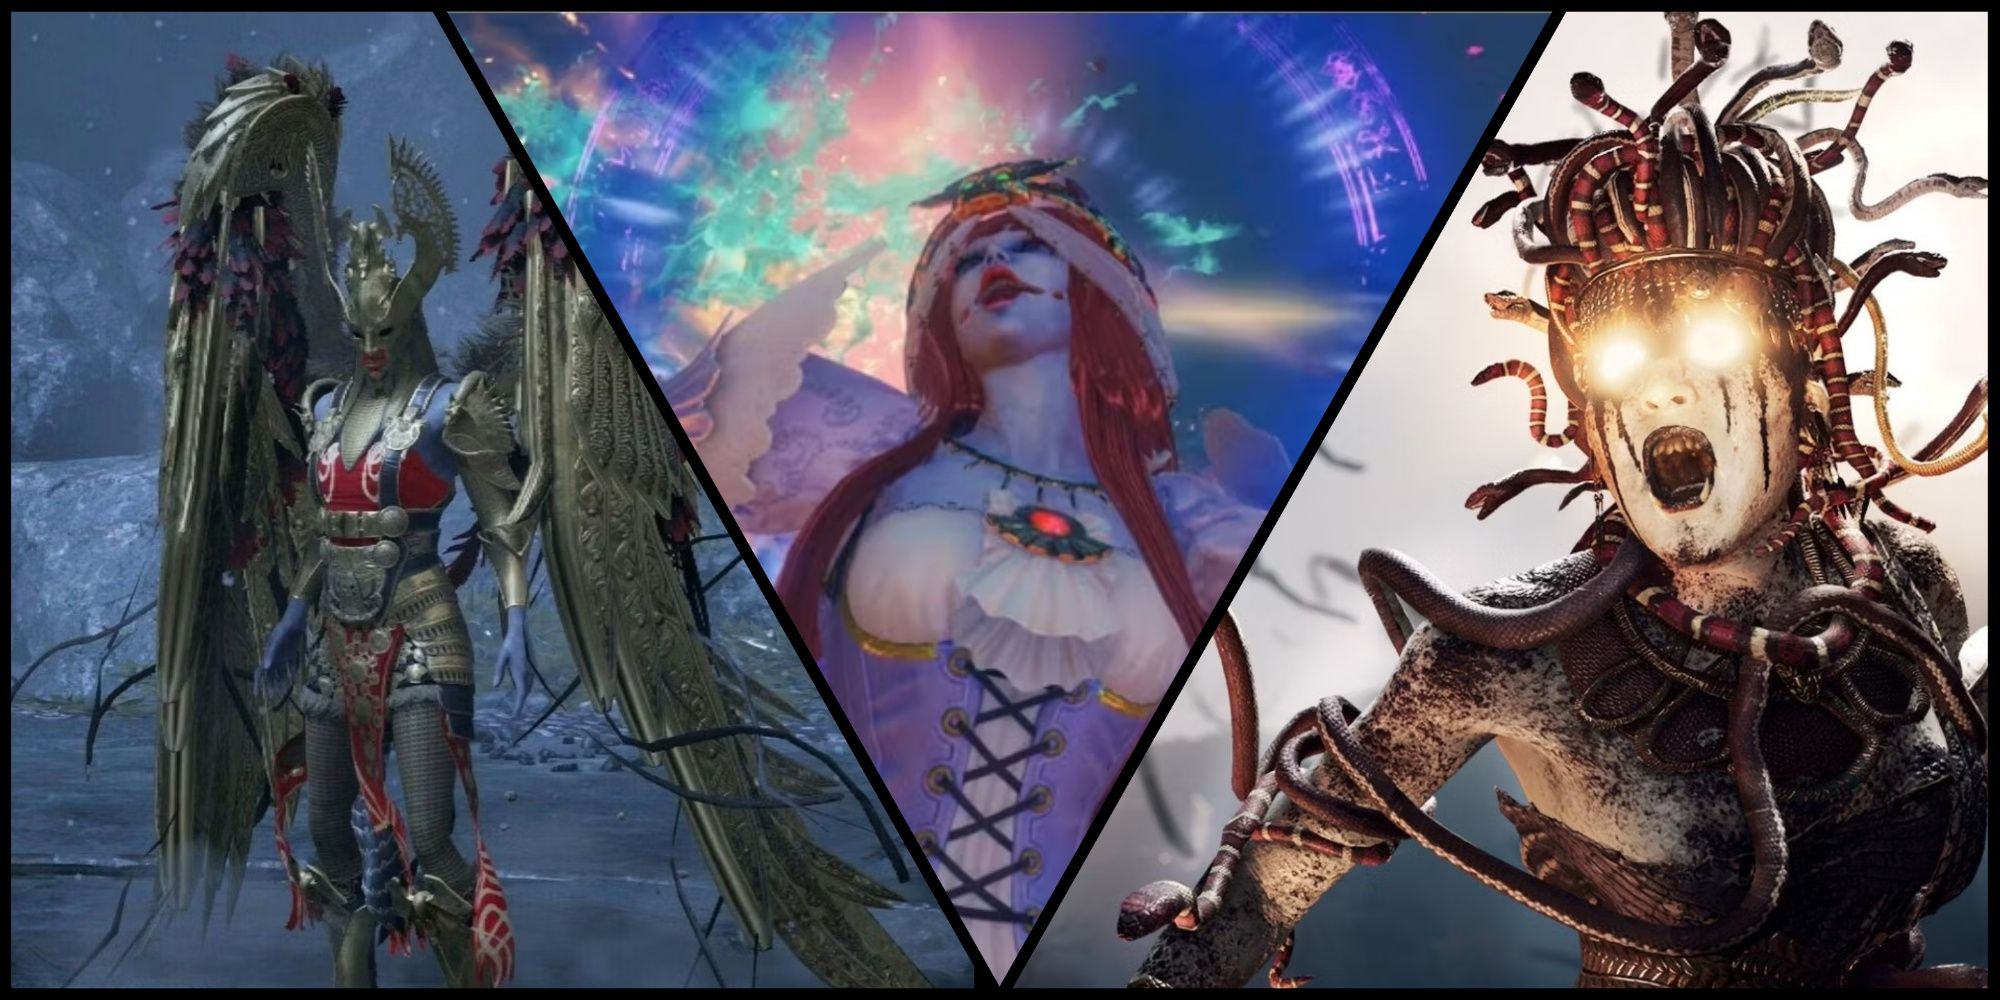 Sigrun in God of War, Baal Zebul in Bayonetta 3, and Medusa in Assassin's Creed Odyssey